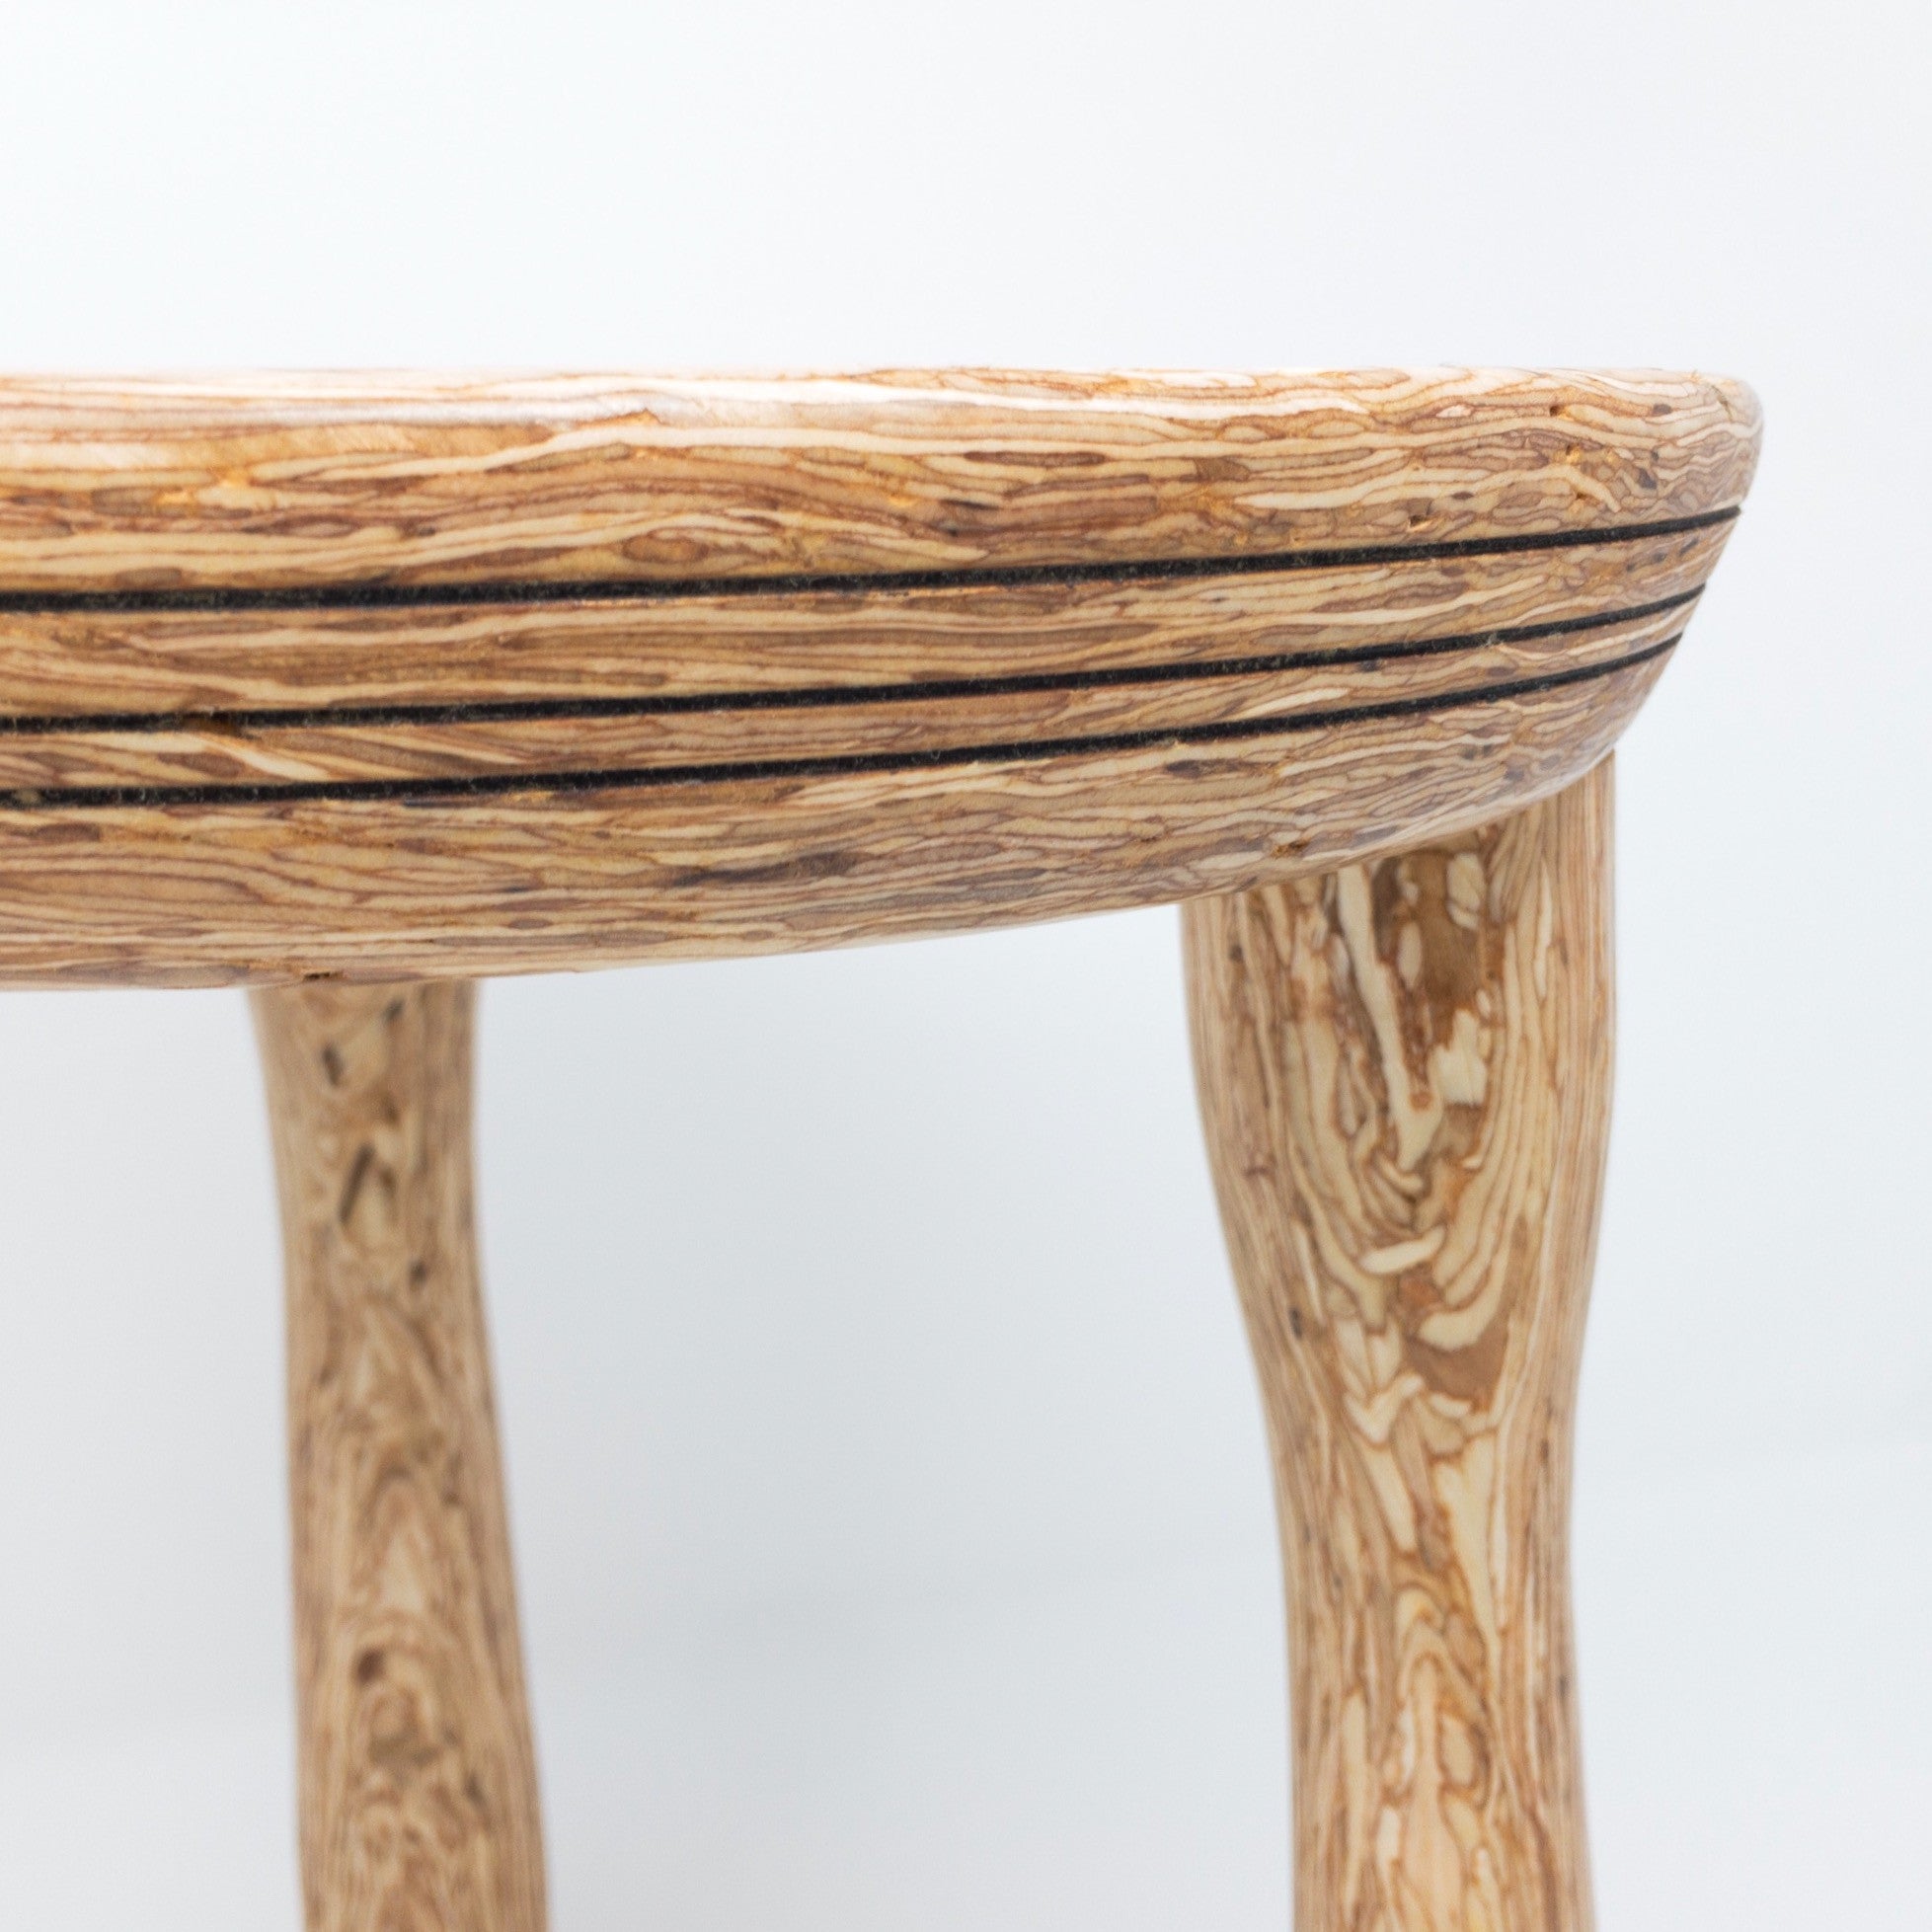 Three legged stool made of Parlam wood. Visually delightful.